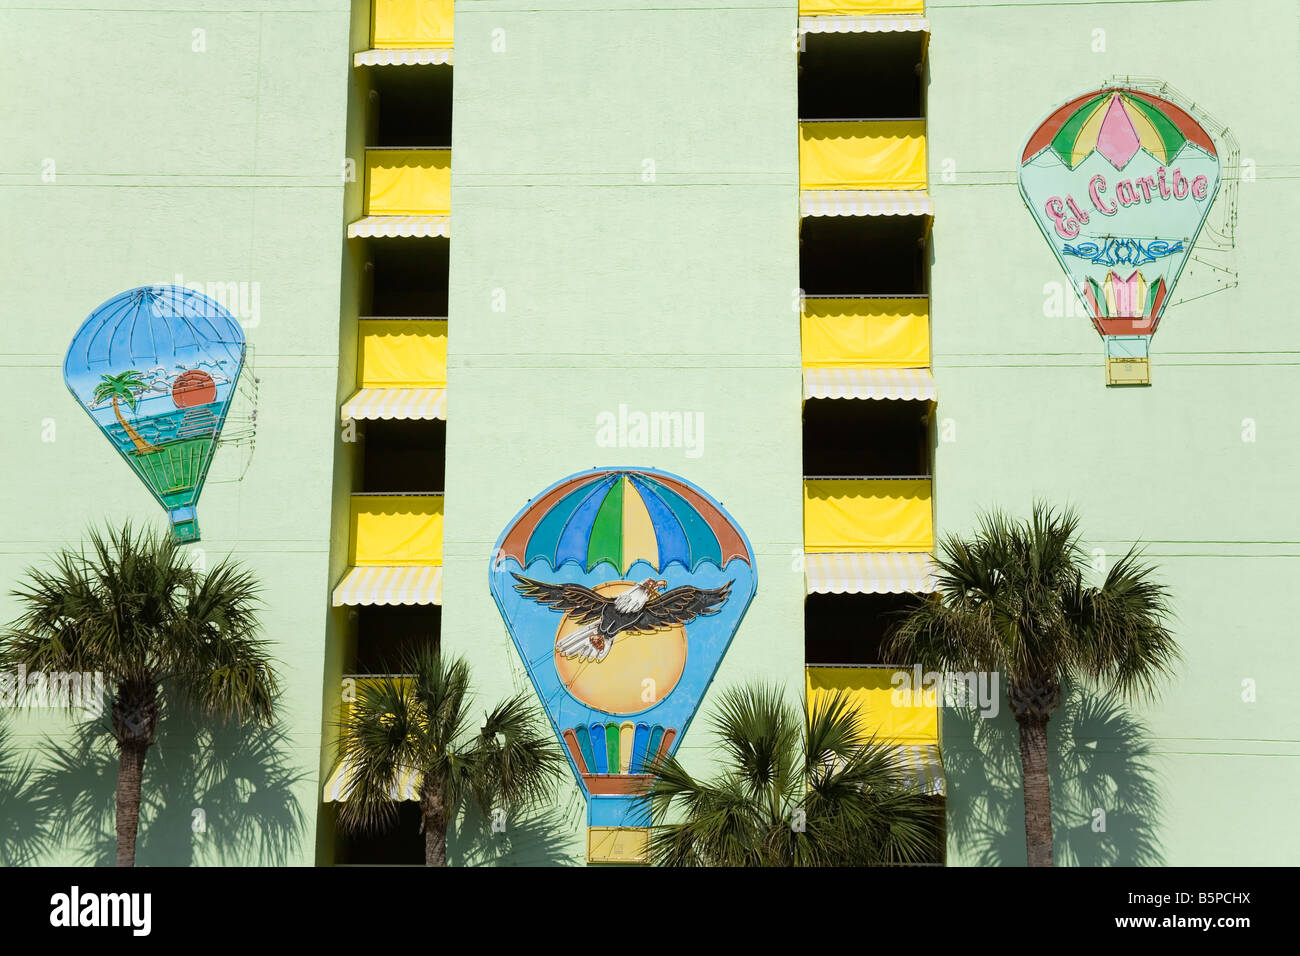 El Caribe Resort Daytona Beach Florida USA Stock Photo